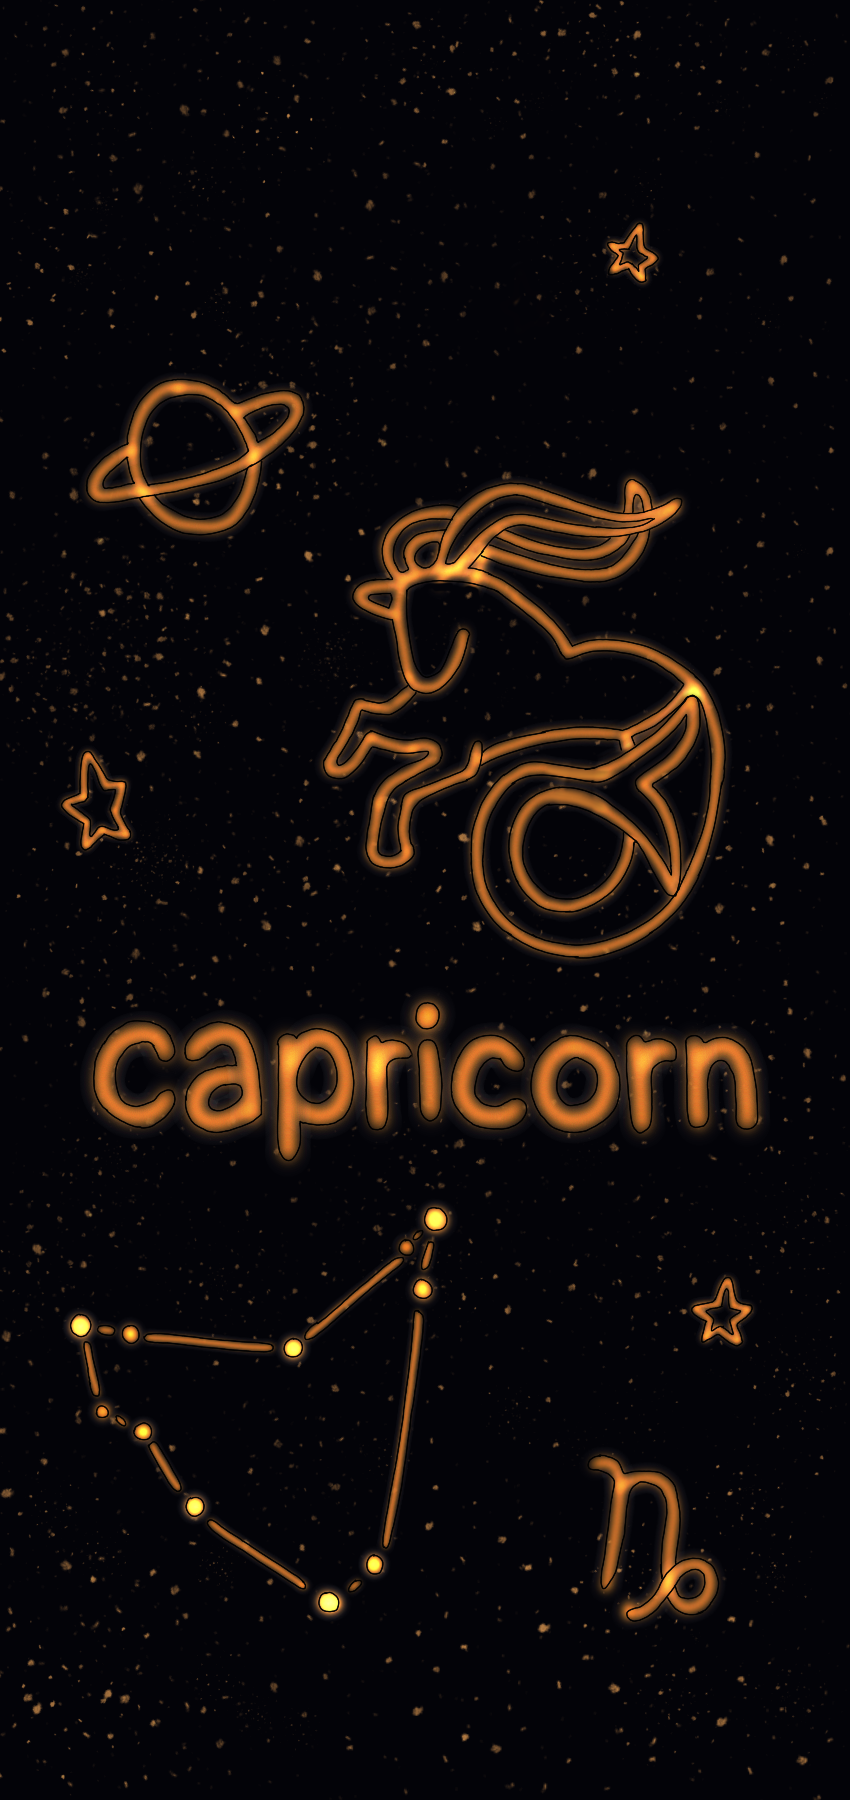 Capricorn Zodiac Sign Wallpaper iPhone. Capricorn aesthetic, Bad girl wallpaper, Capricorn